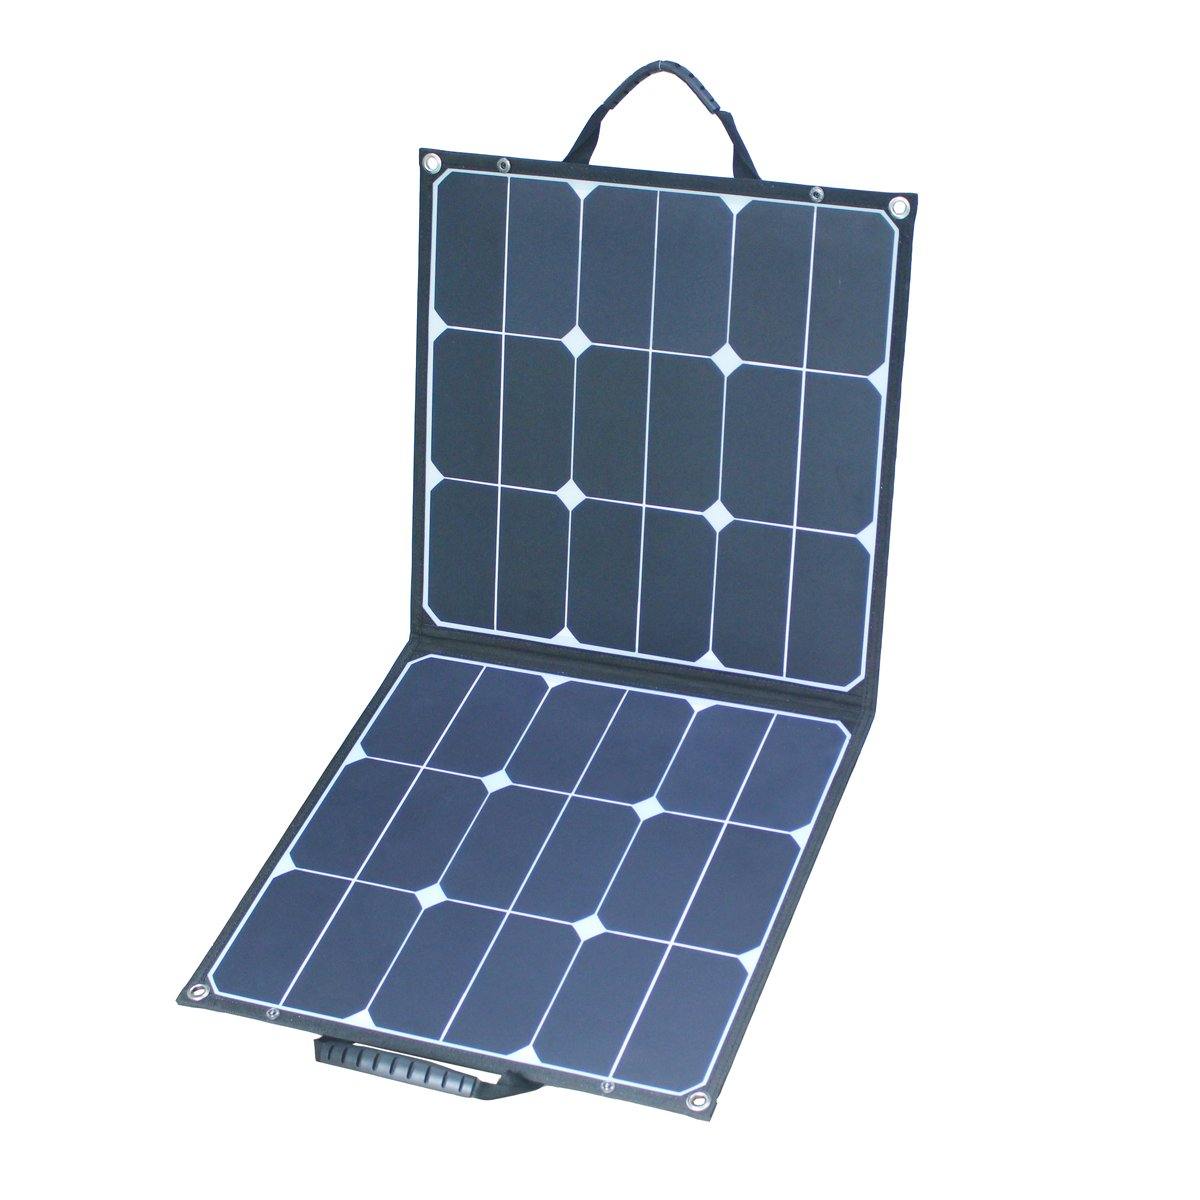 iForway ソーラーパネル SC60SF21 - Cモール